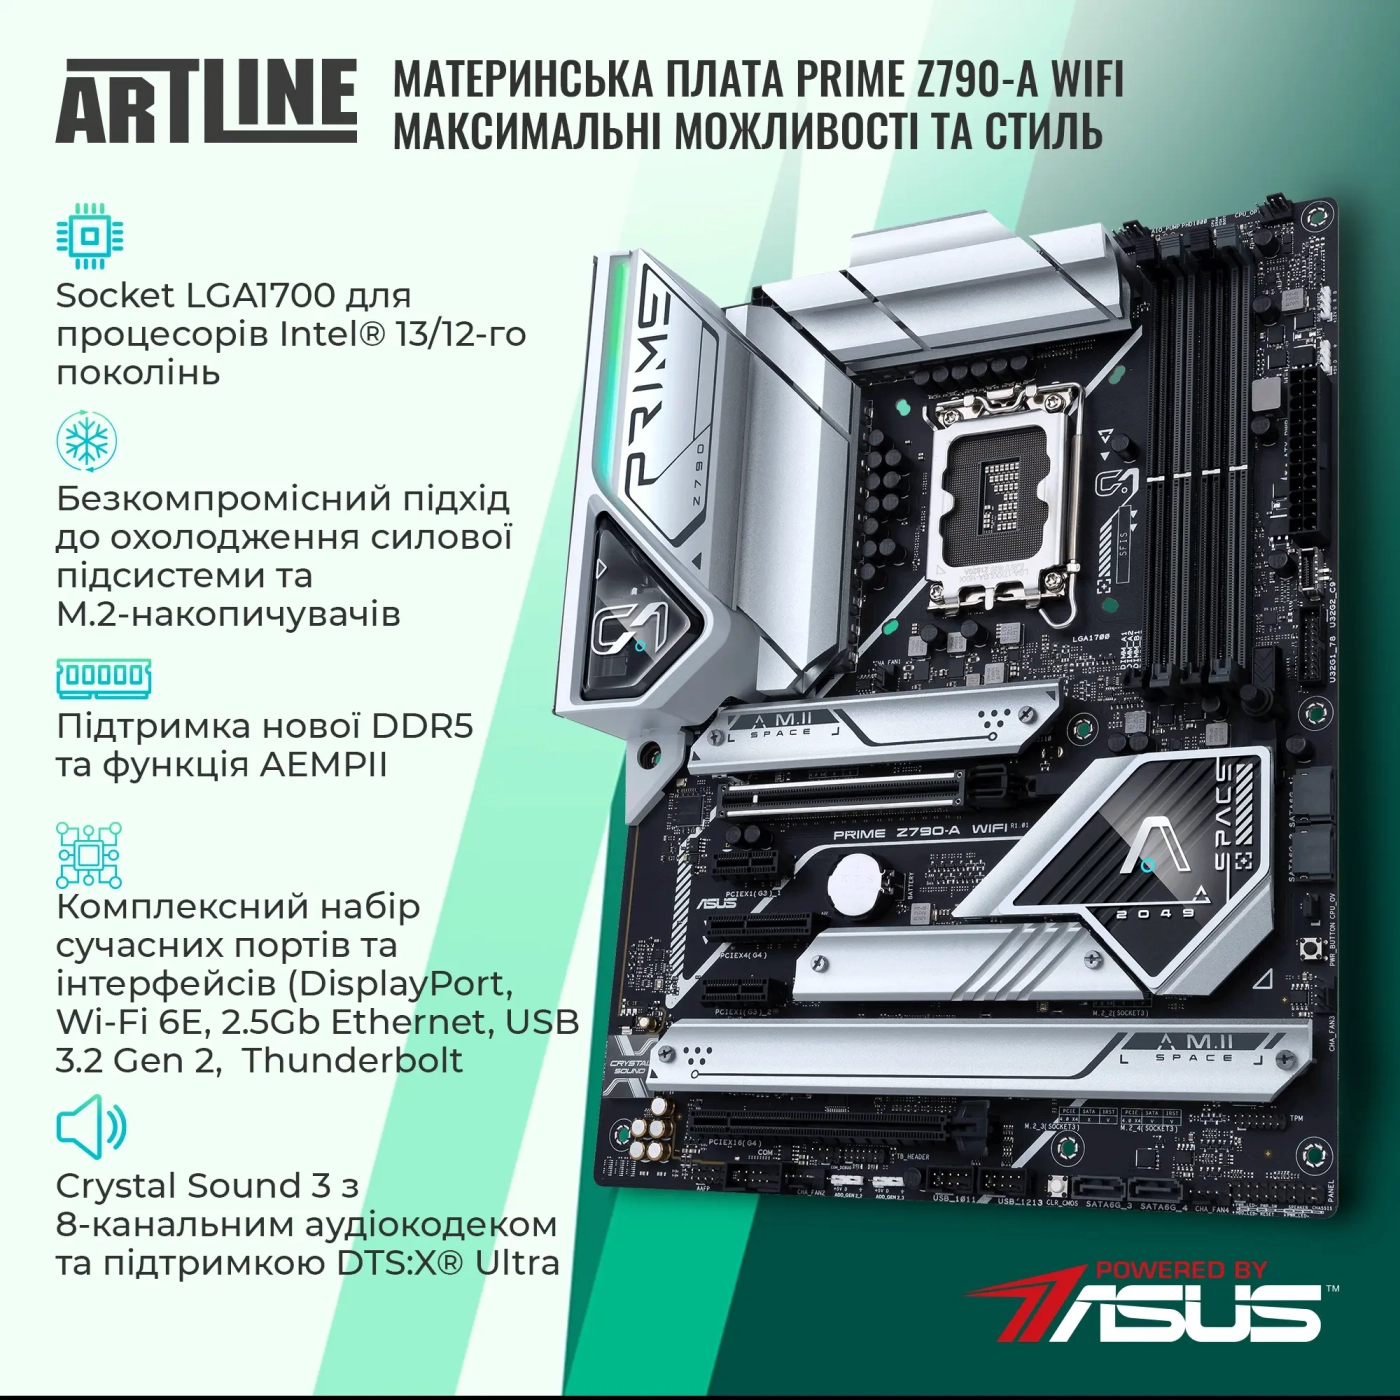 Купить Компьютер ARTLINE Overlord GT502 (GT502v42w) - фото 3